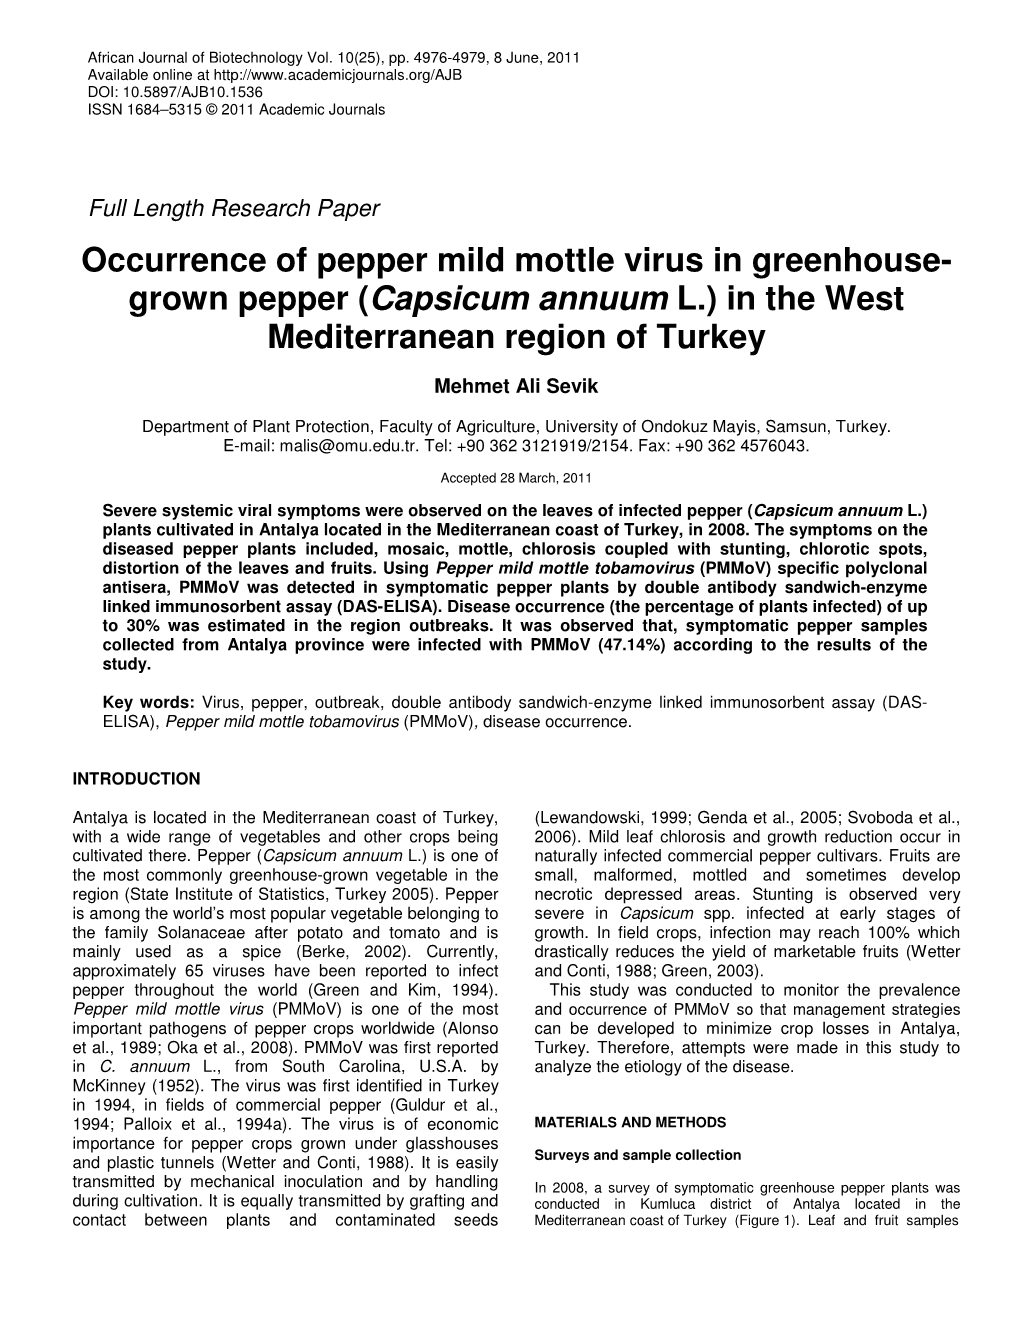 Occurrence of Pepper Mild Mottle Virus in Greenhouse- Grown Pepper (Capsicum Annuum L.) in the West Mediterranean Region of Turkey